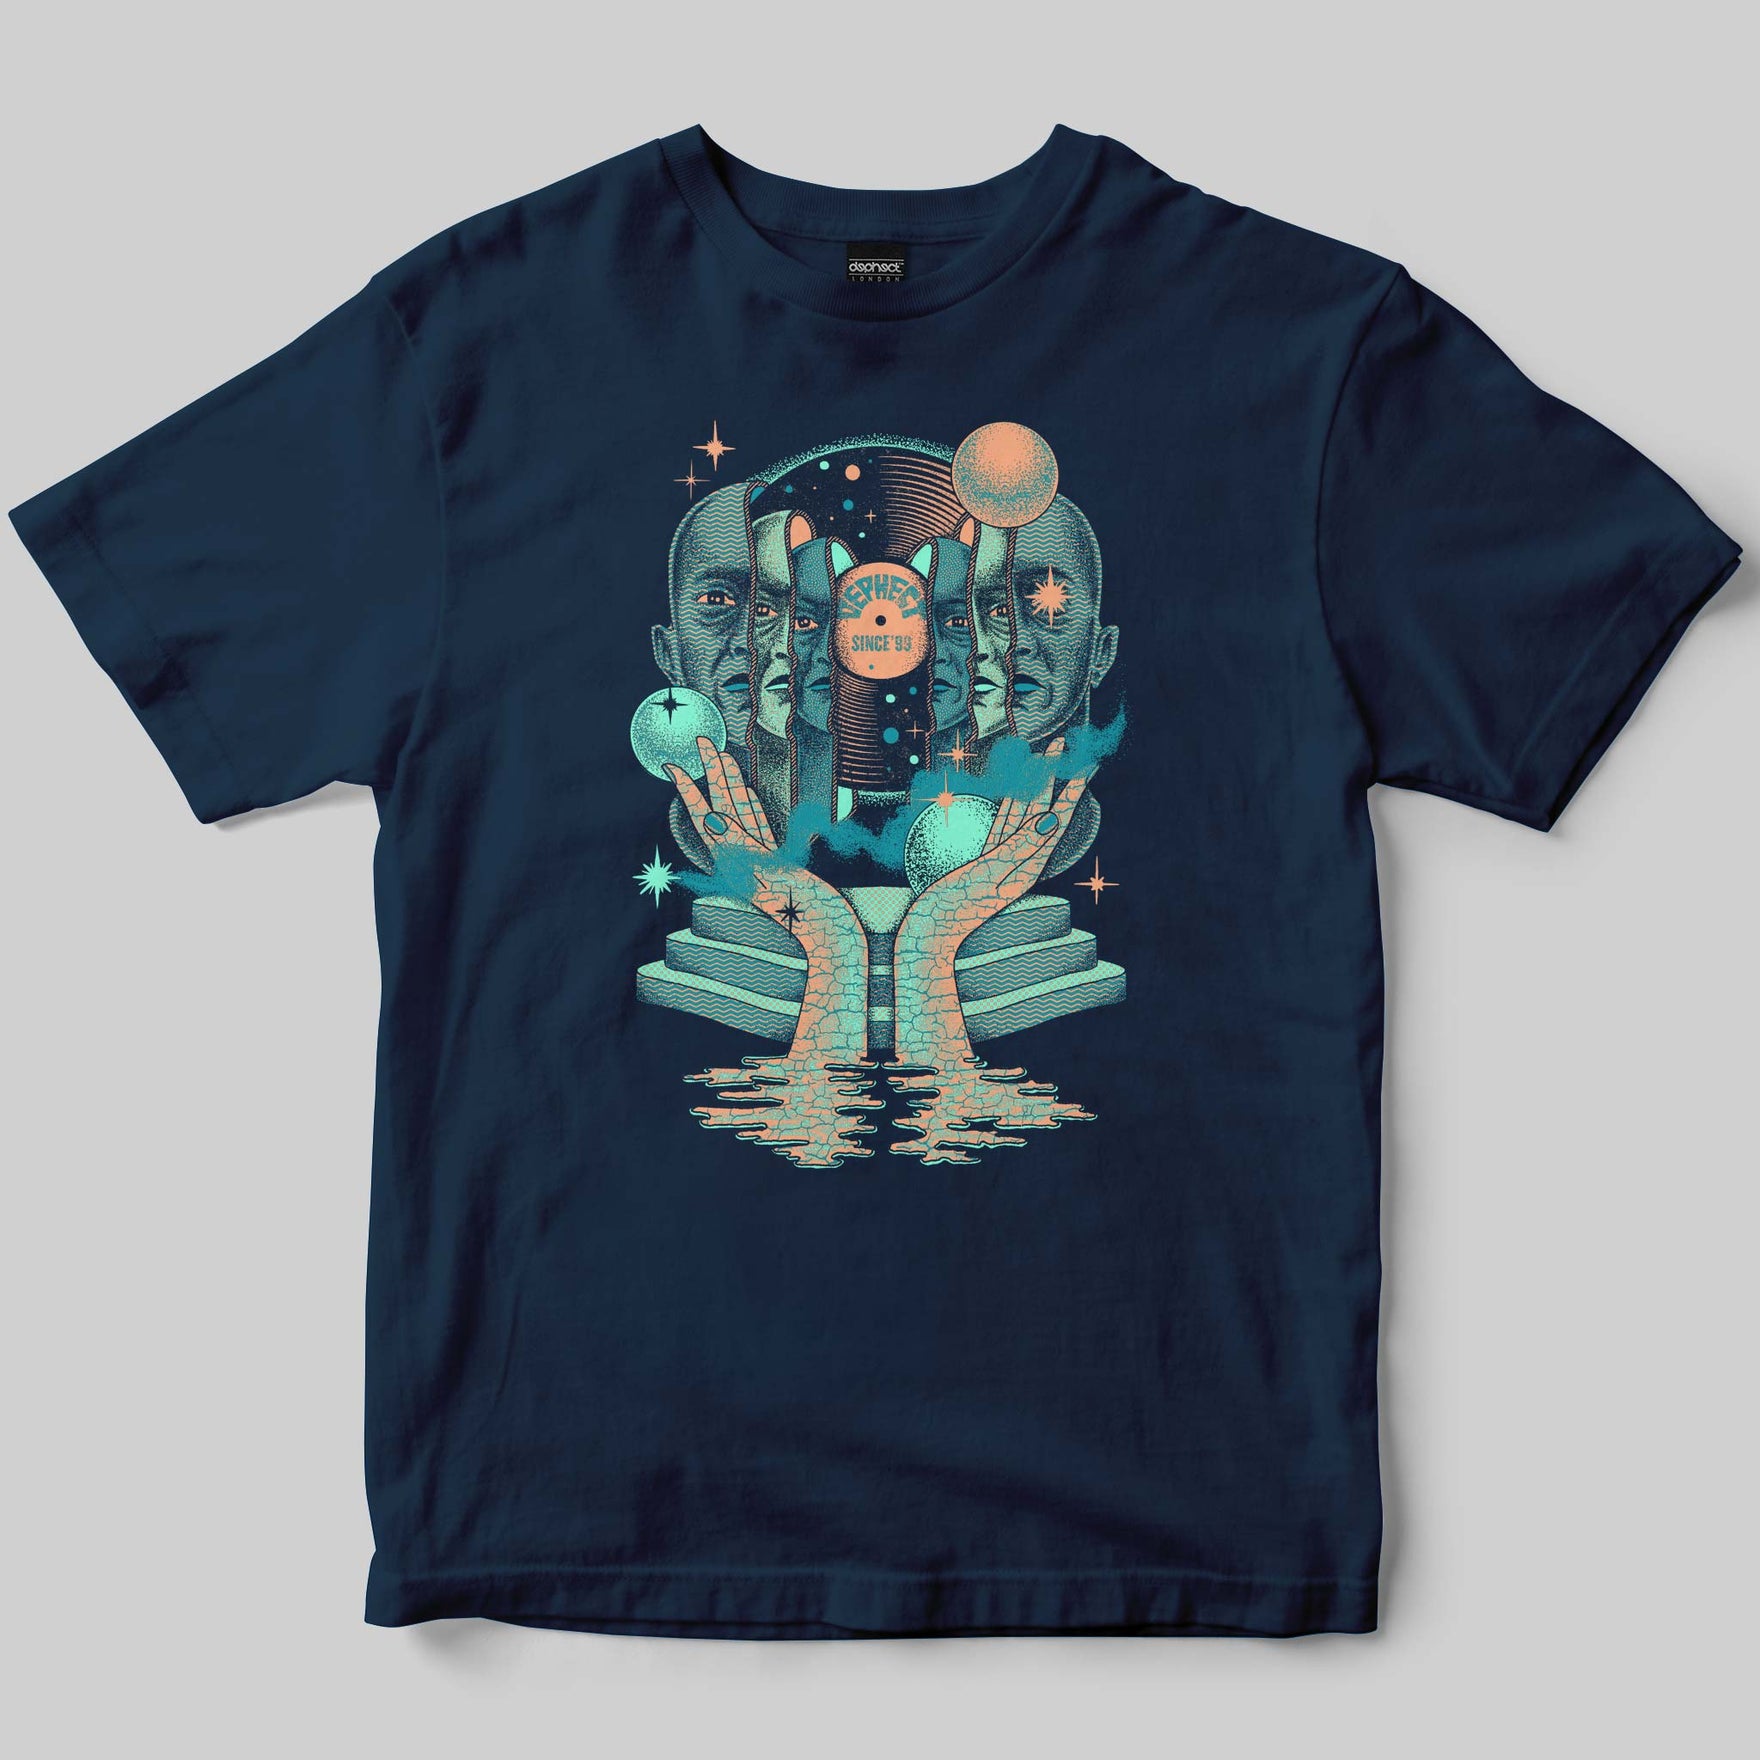 Mystic T-Shirt / Navy / by Manifiesto 79